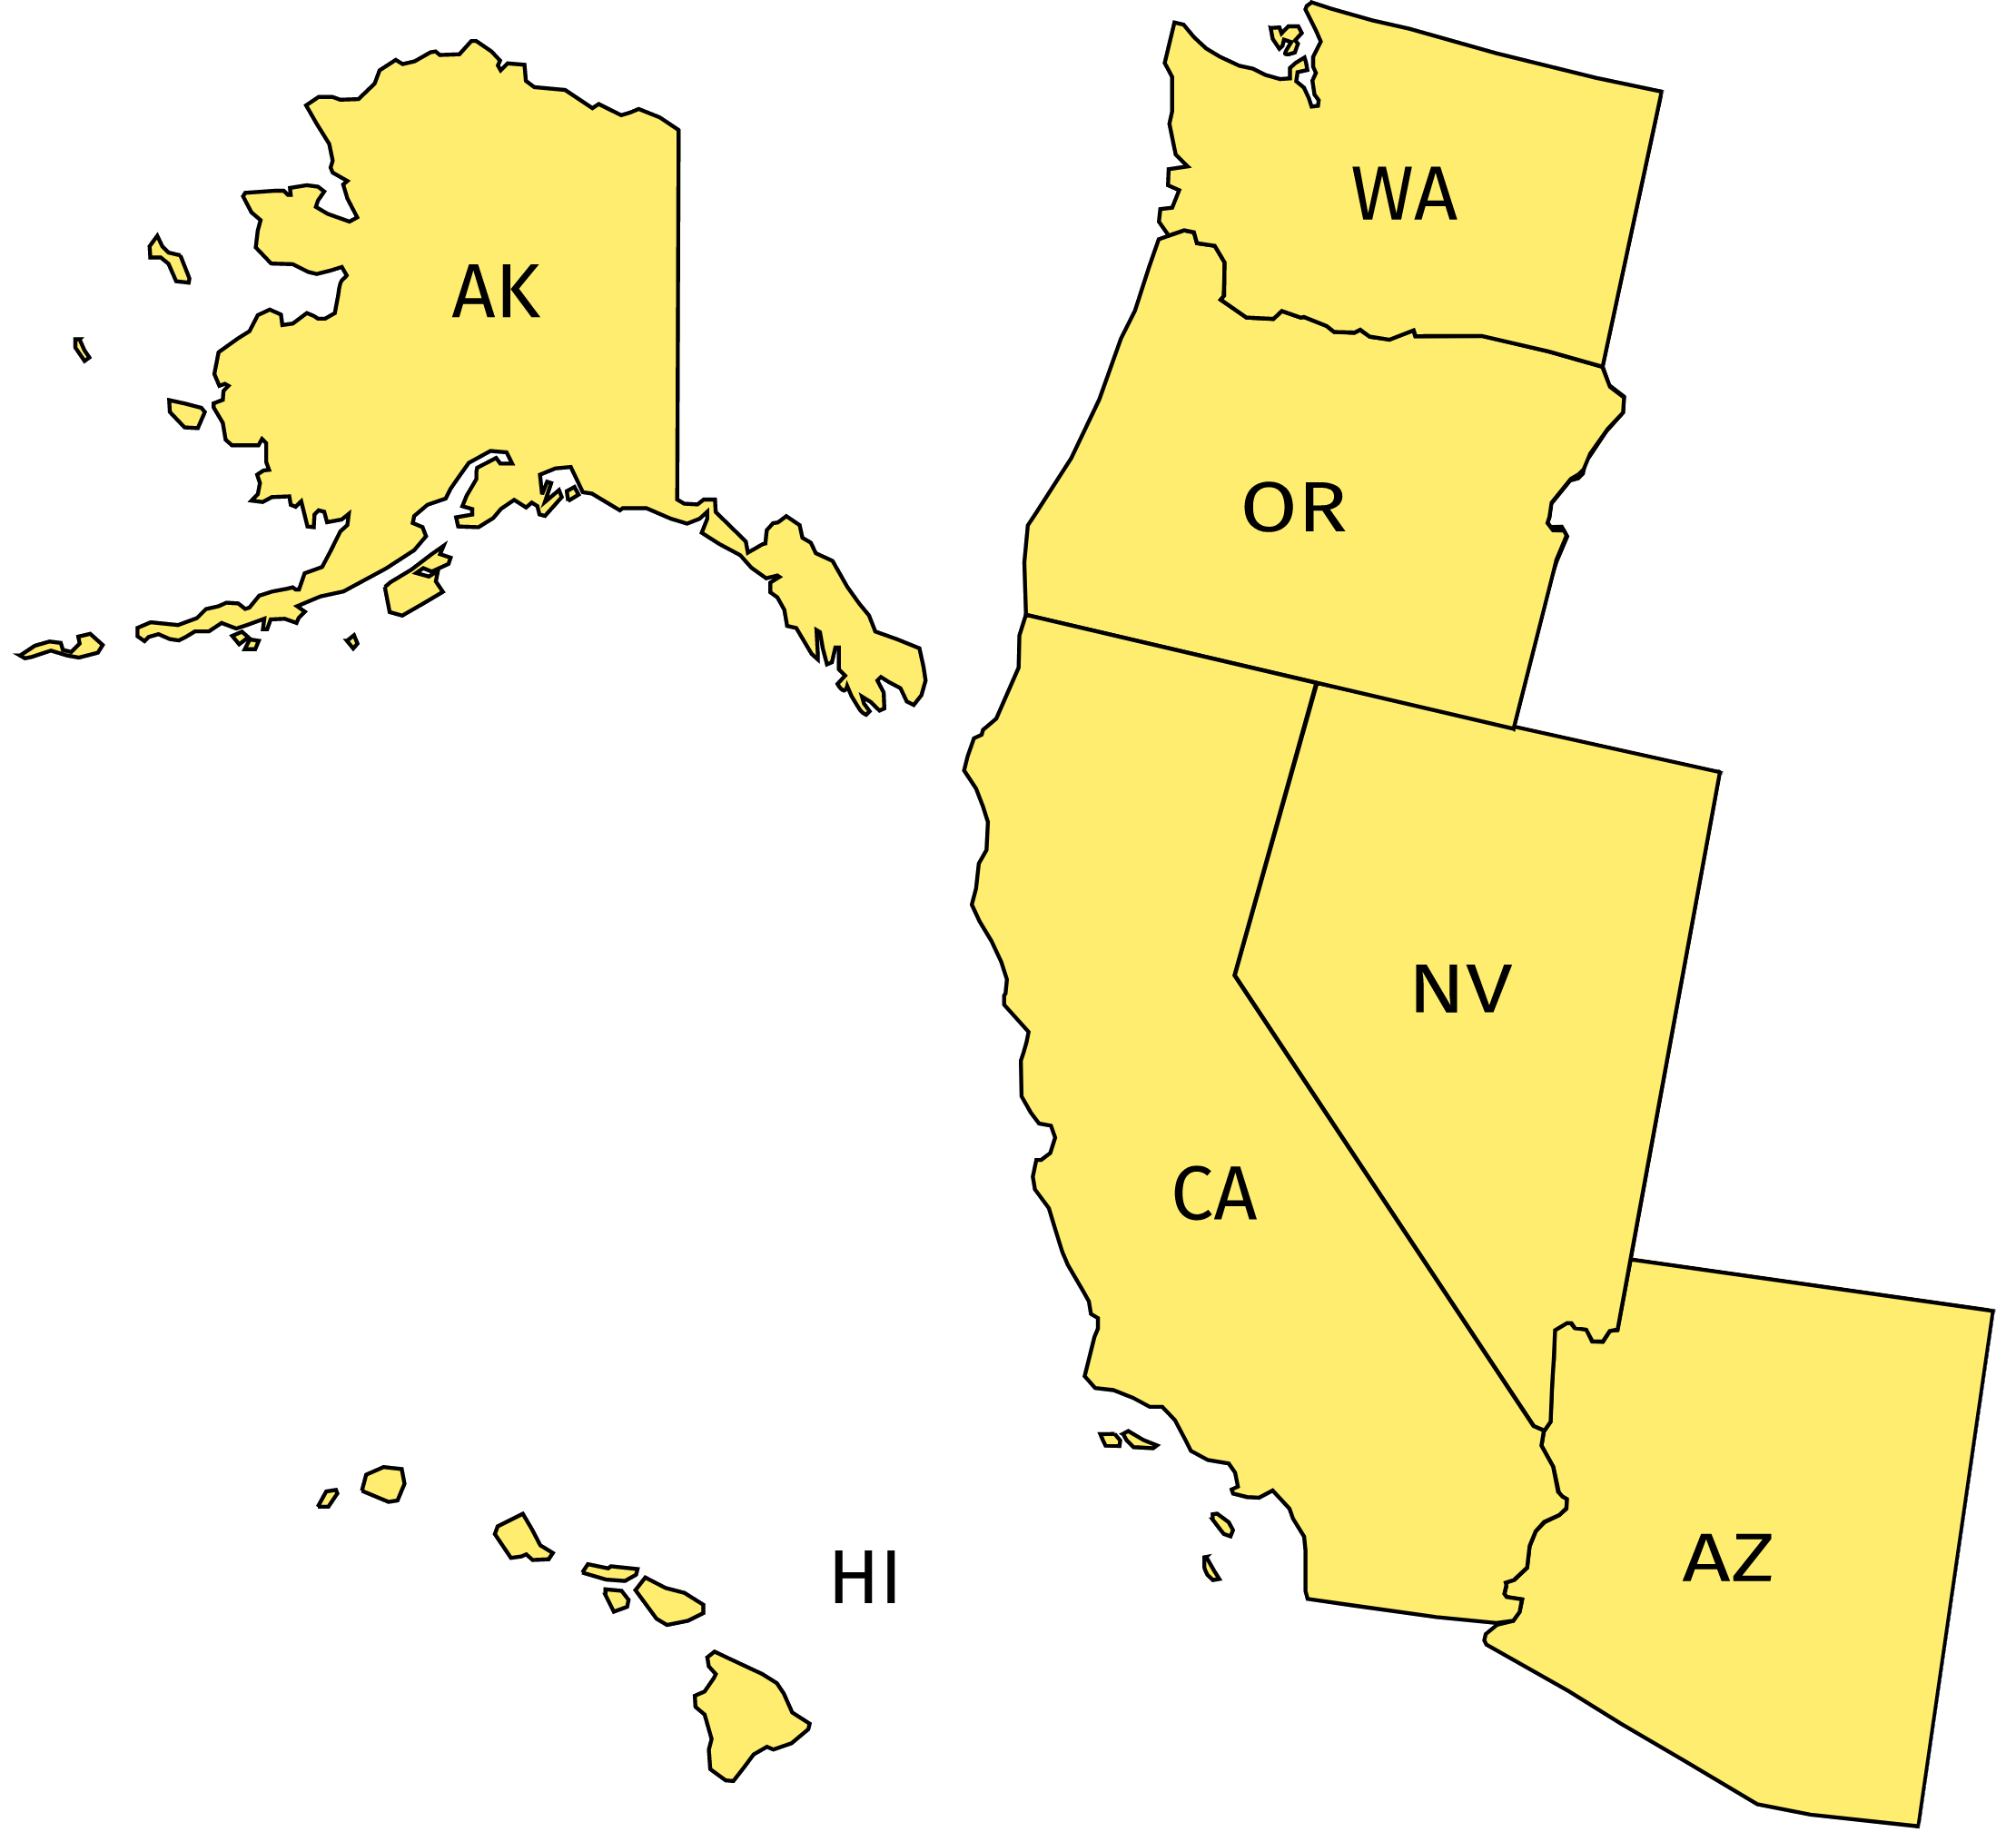 Western Division map of AK, WA, OR, HI, CA, NV, AZ